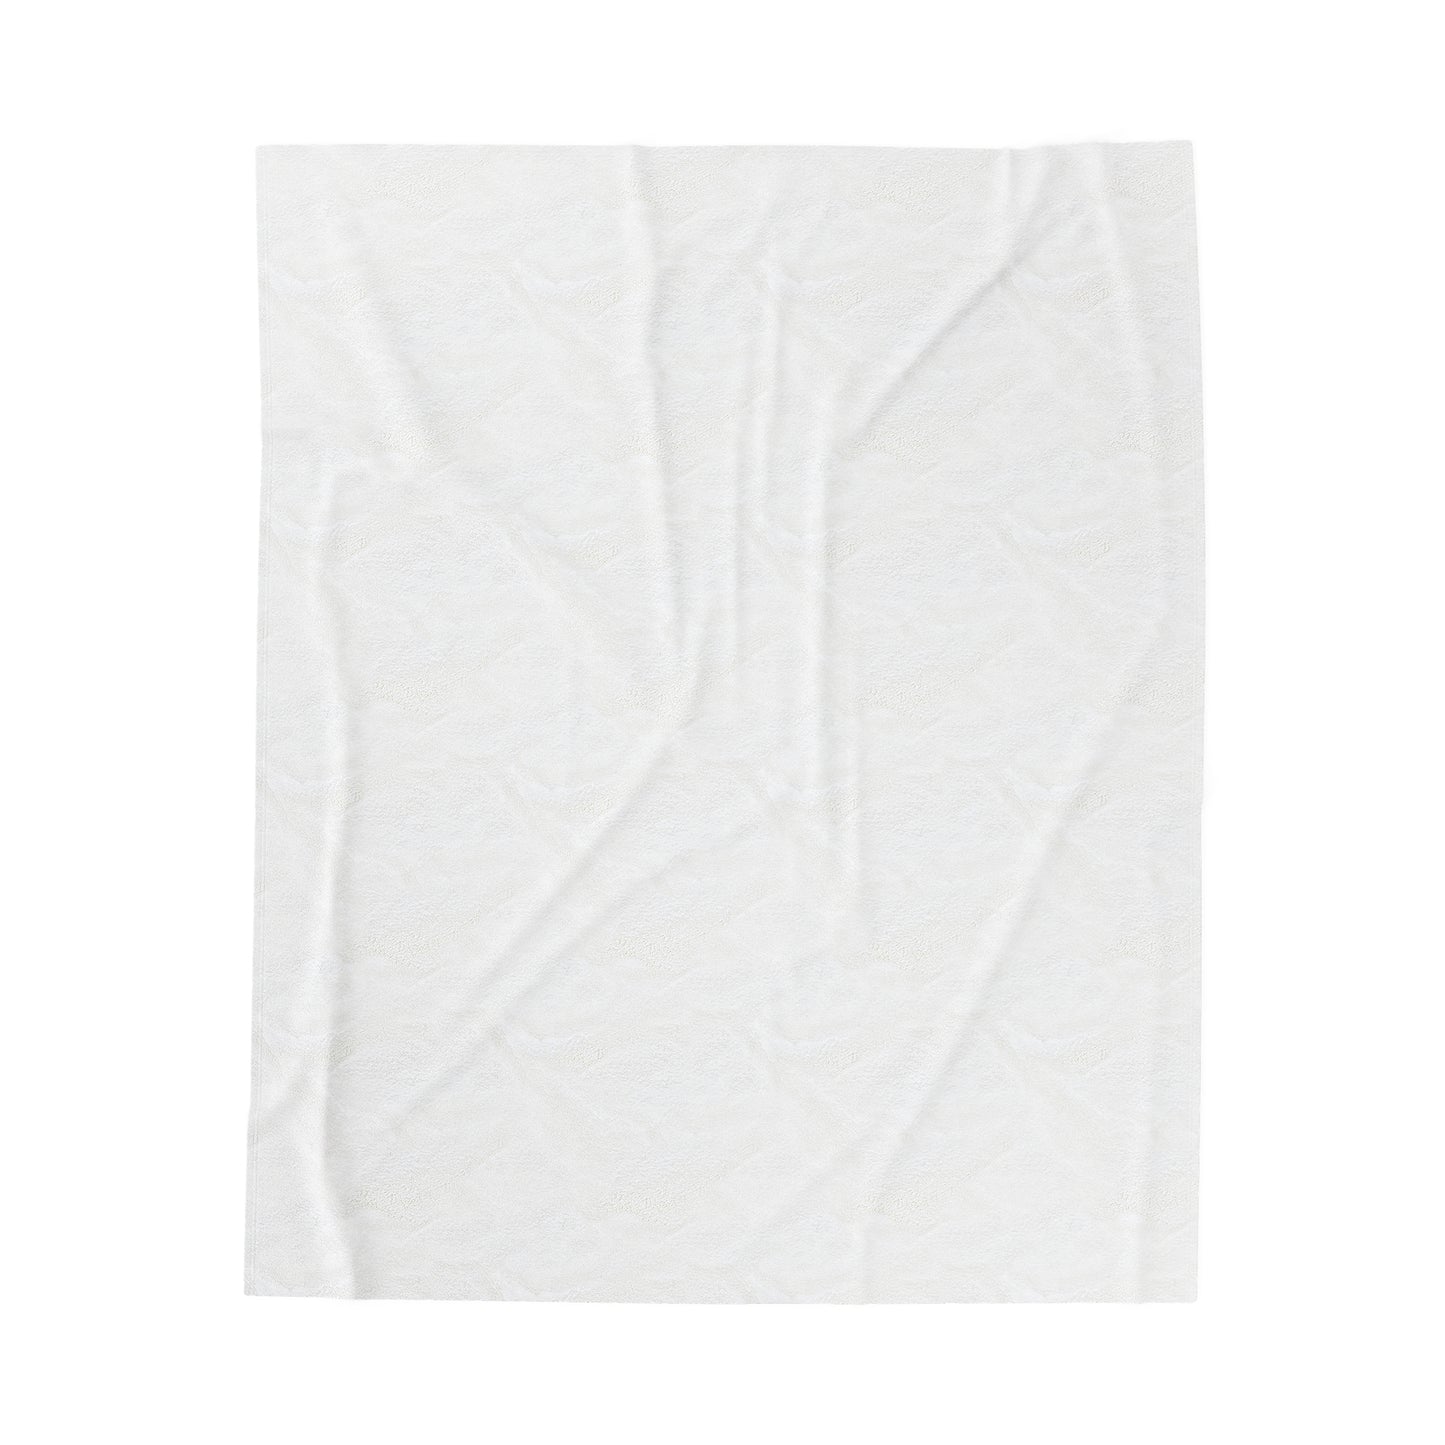 Exclusive 'Flaming June' Design - Velveteen Plush Blanket